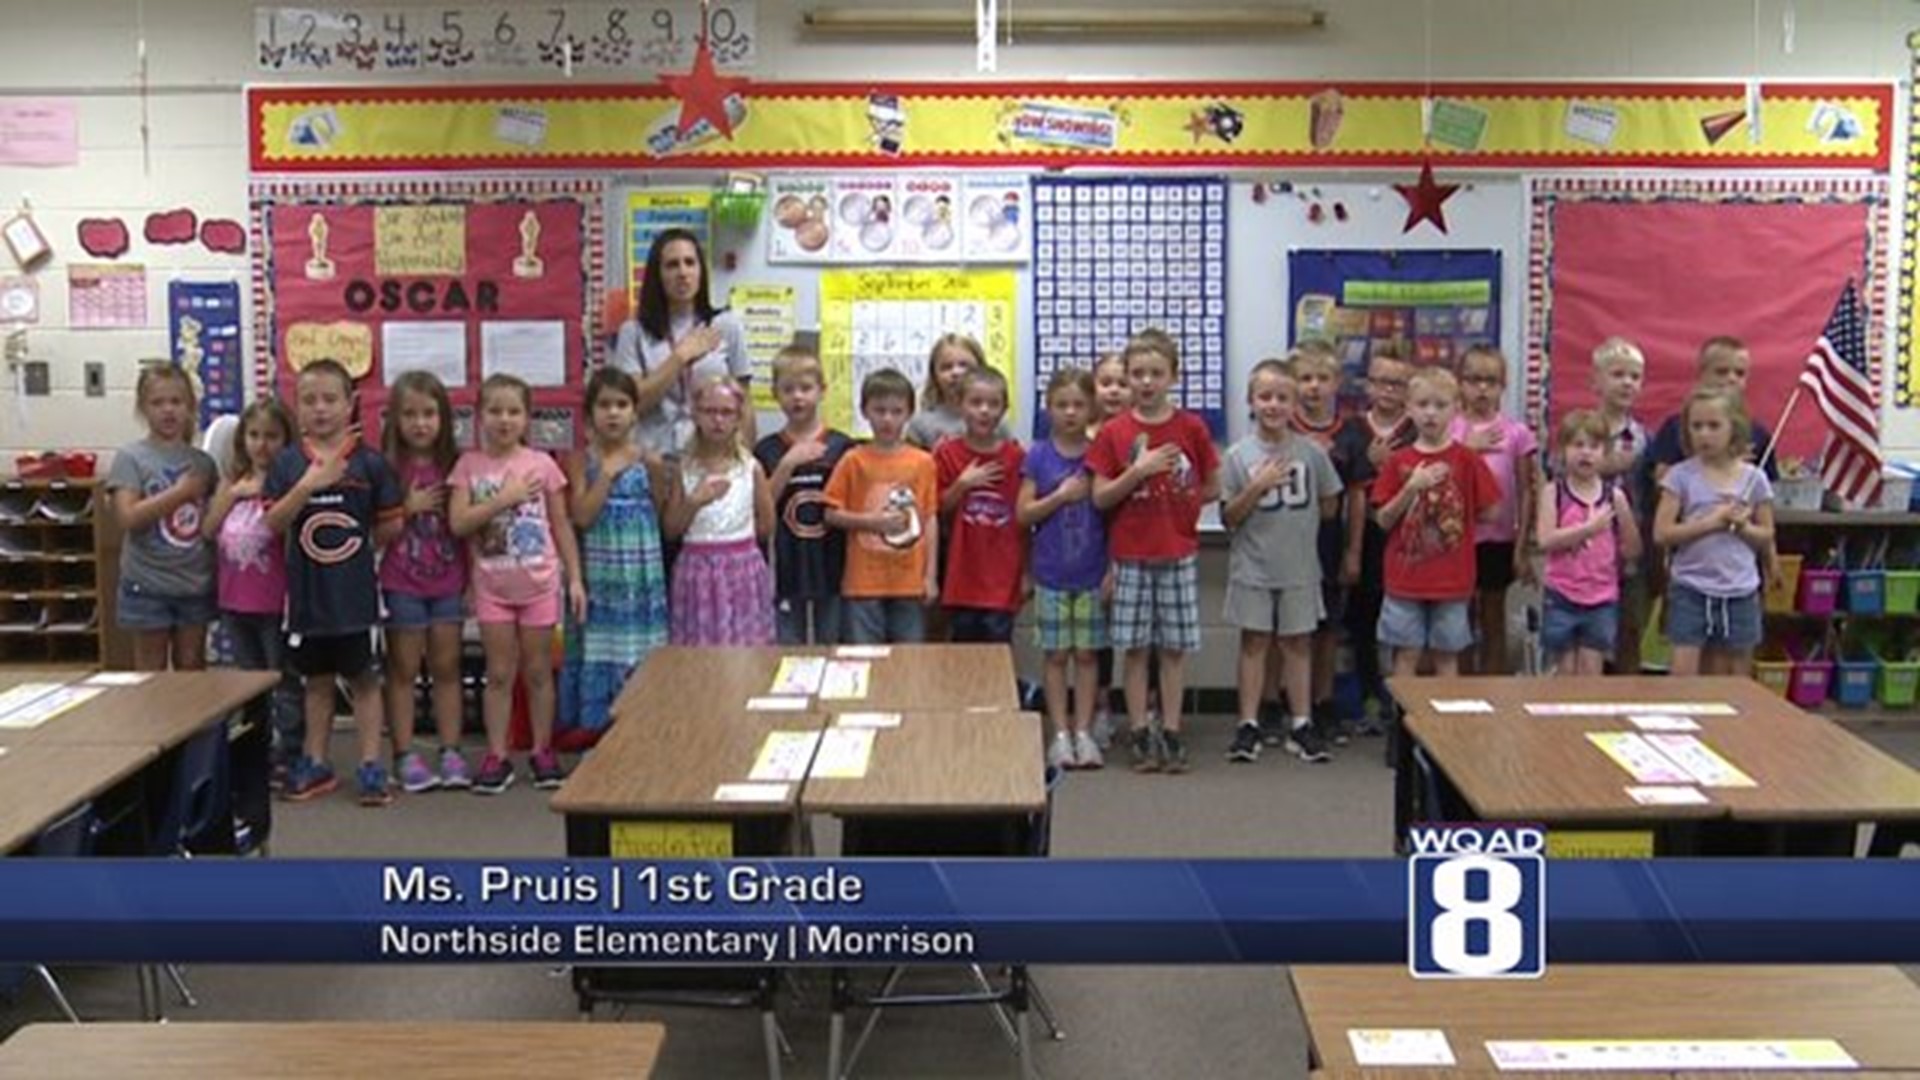 Ms. Pruis` 1st Grade class